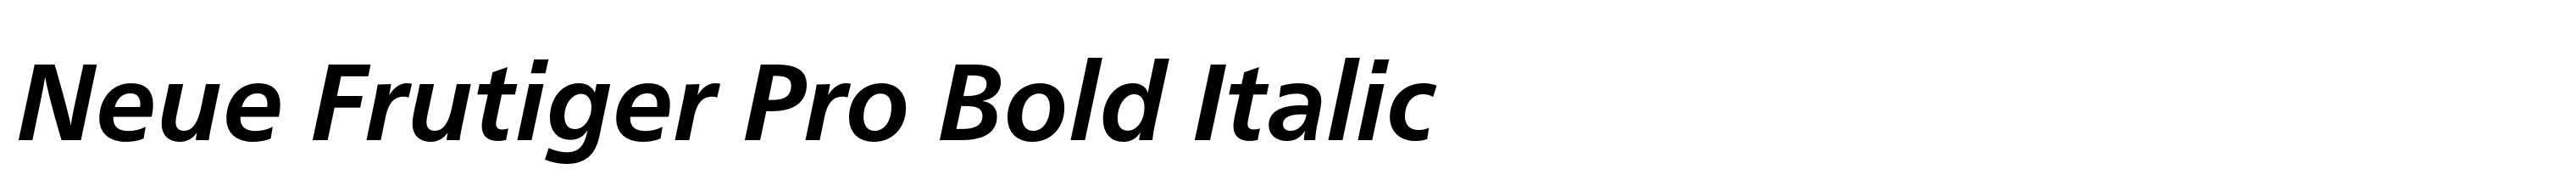 Neue Frutiger Pro Bold Italic